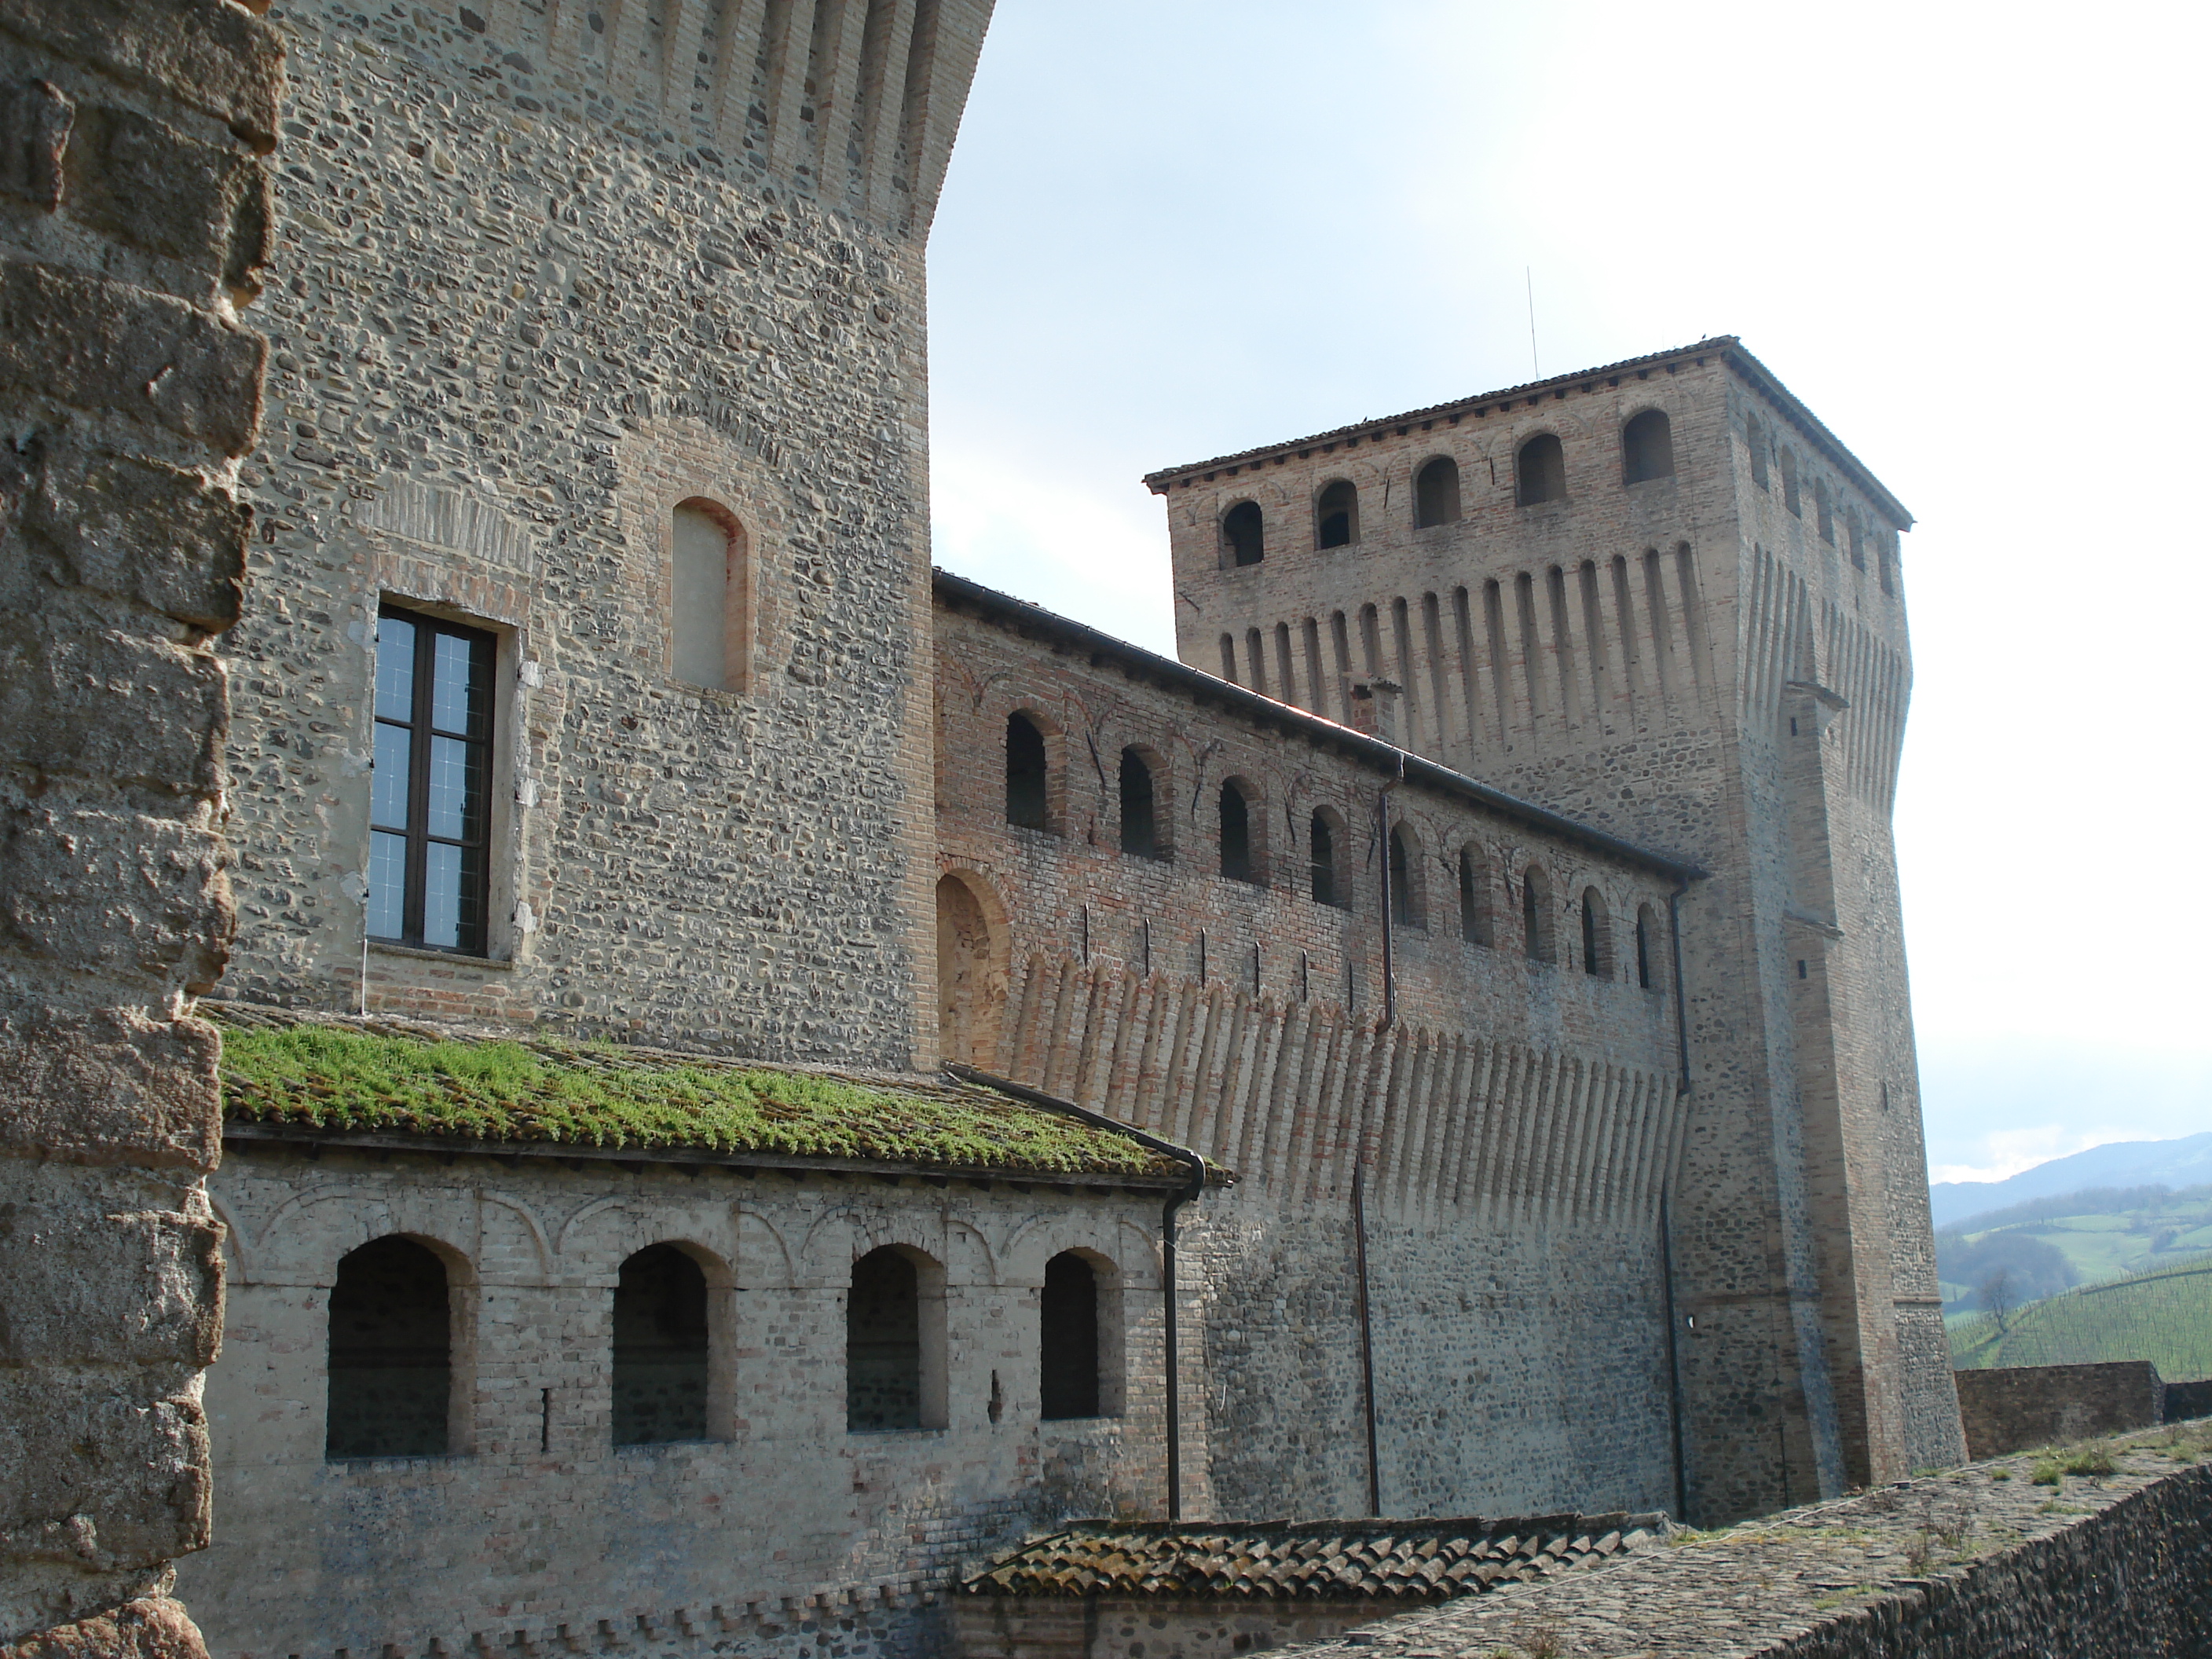 photo: https://upload.wikimedia.org/wikipedia/commons/e/ea/Castello_di_Torrechiara_06.JPG